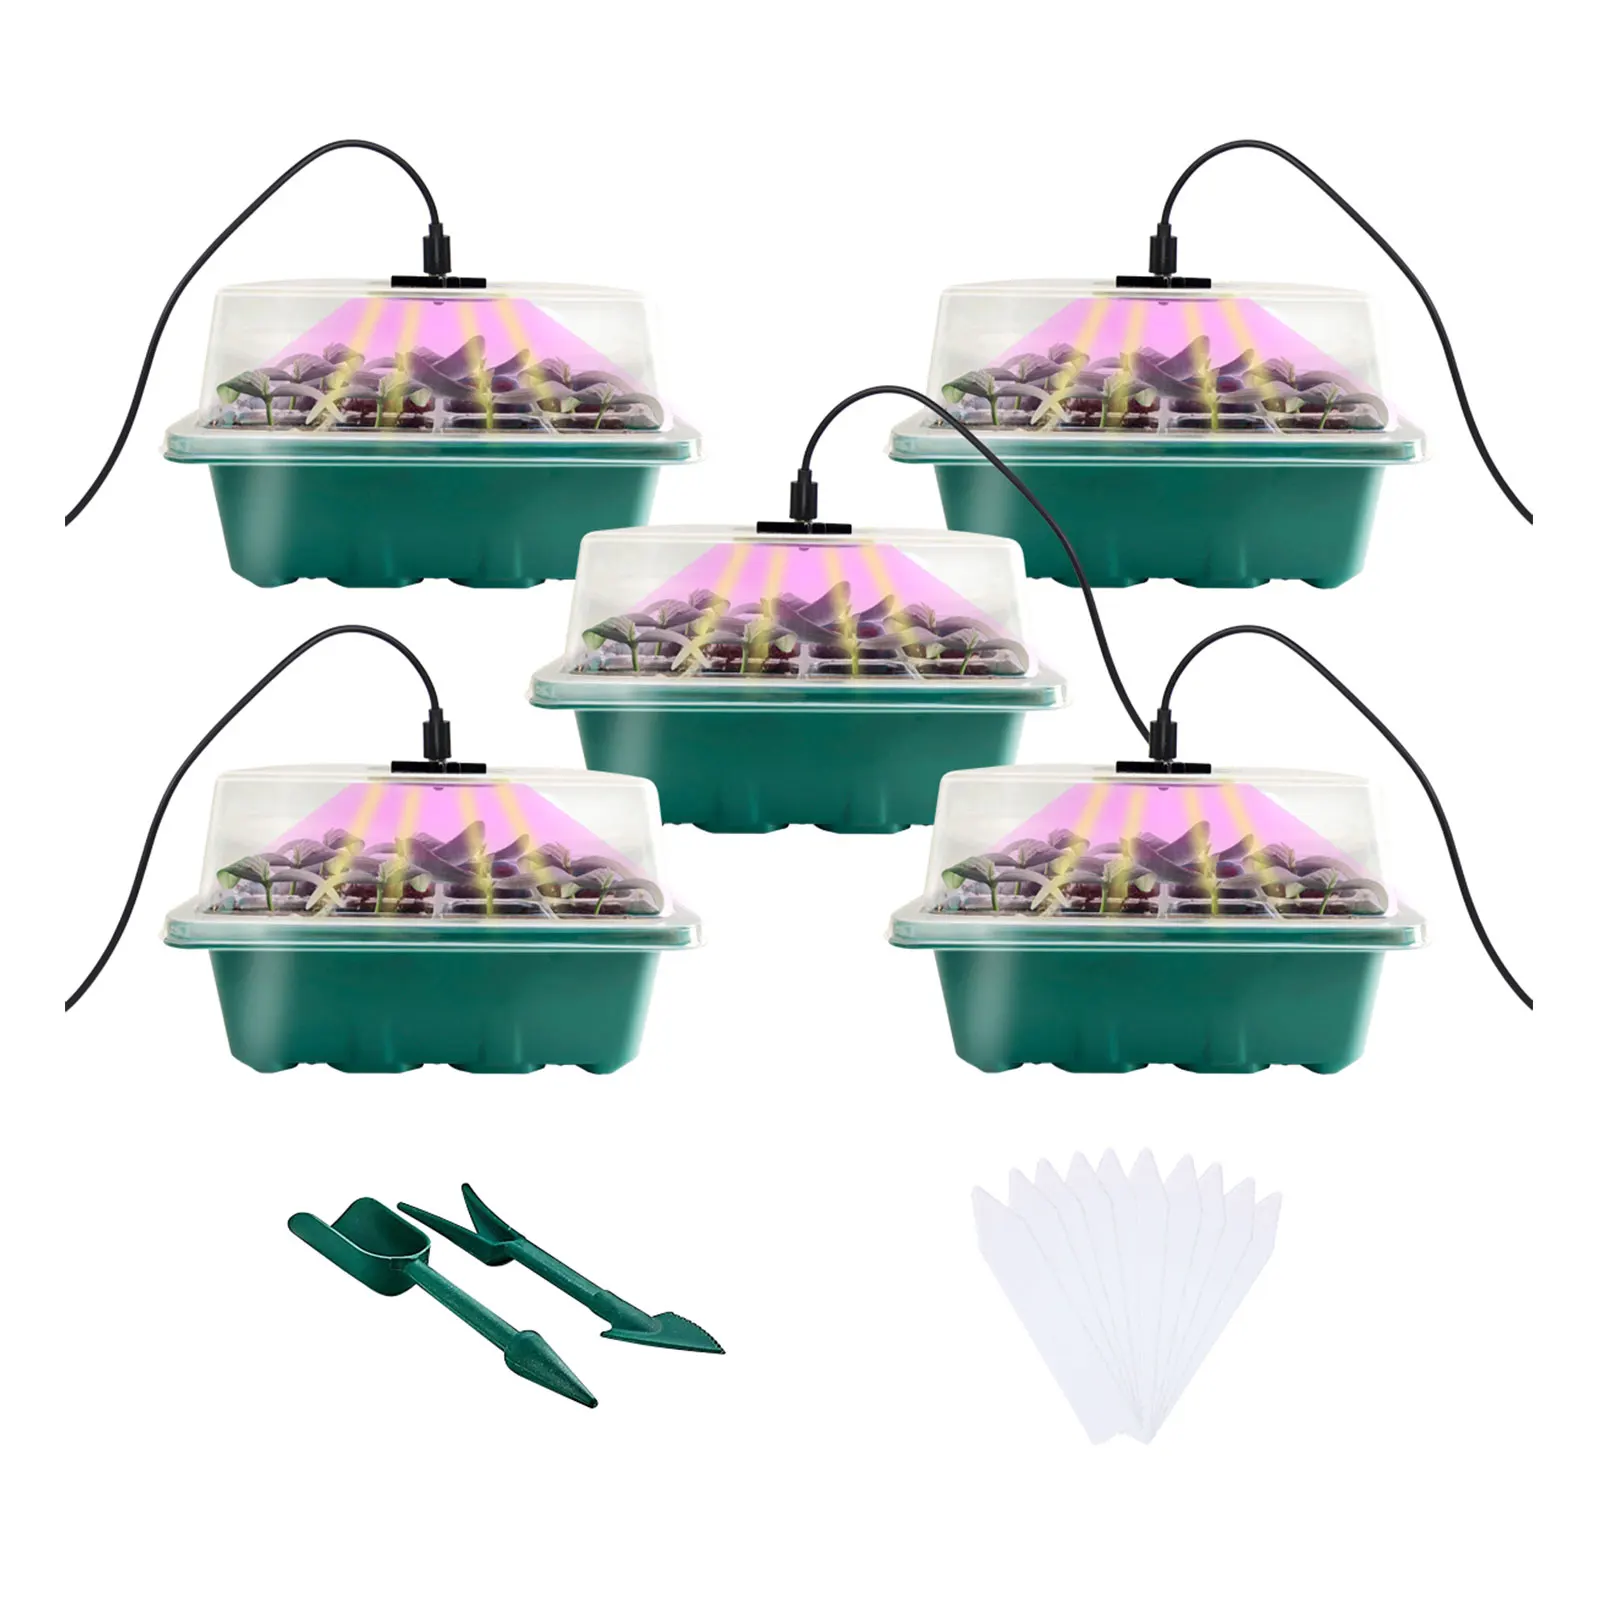 

12 Holes Seed Starter Trays with Grow LED Light Nursery Pot Seeding Tray Seed Grow Planter Flowerpots Gardening Tools